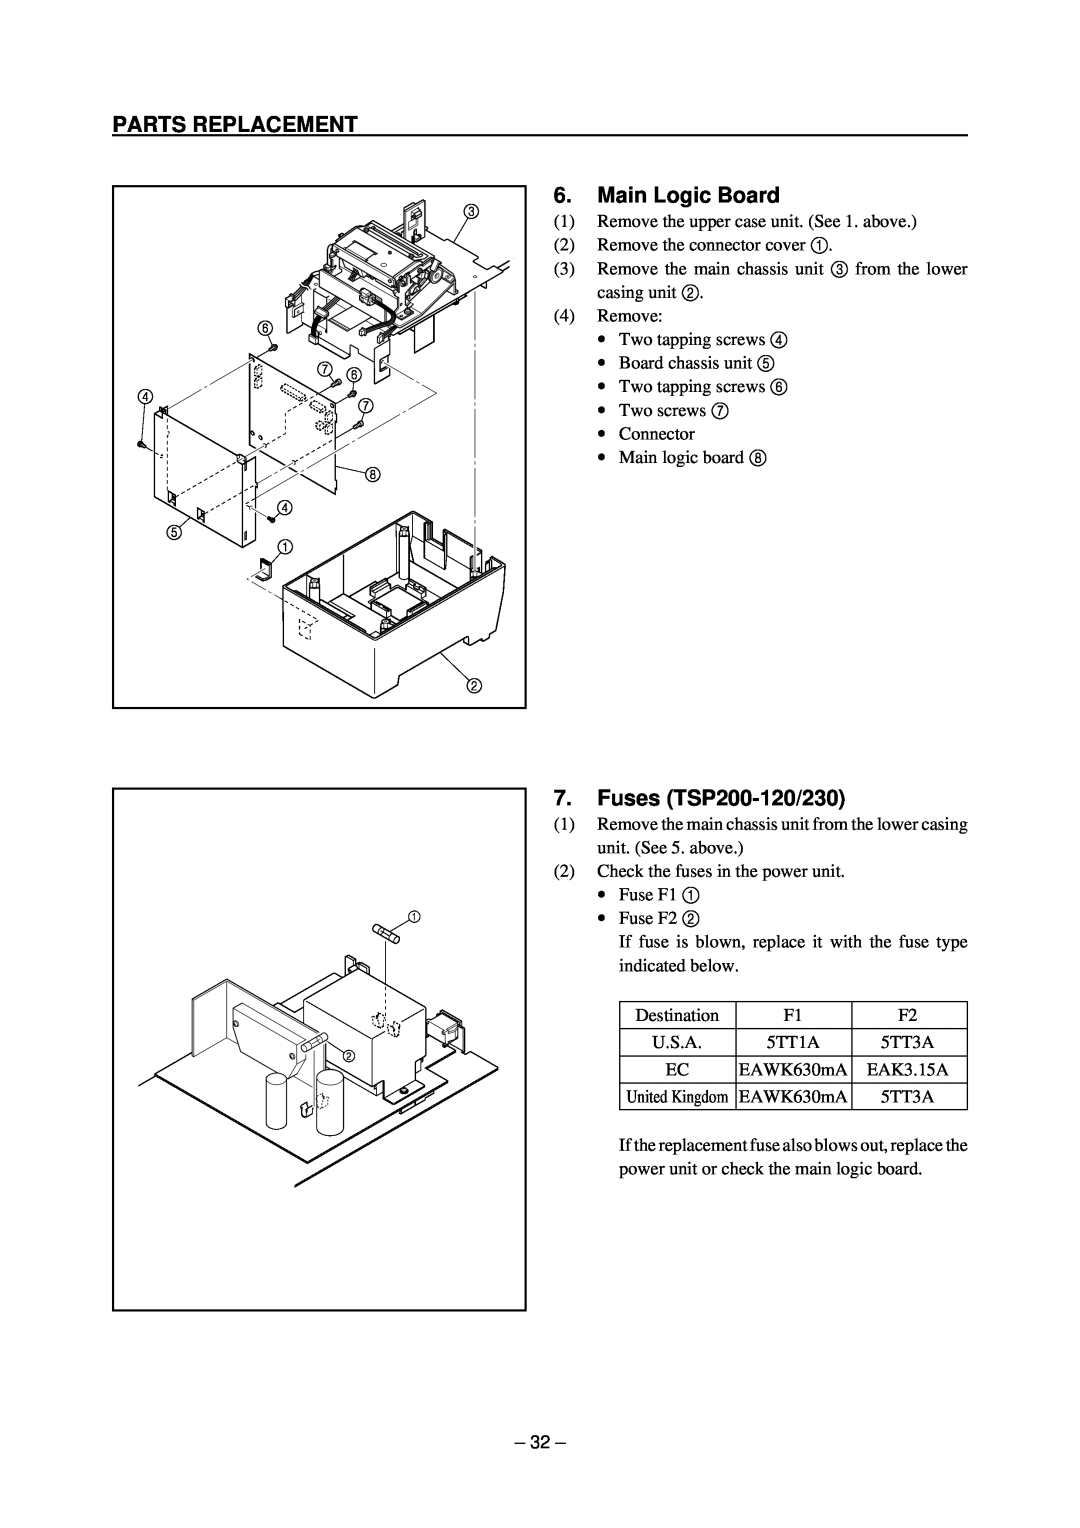 Star Micronics technical manual Main Logic Board, Fuses TSP200-120/230, Parts Replacement, United Kingdom 